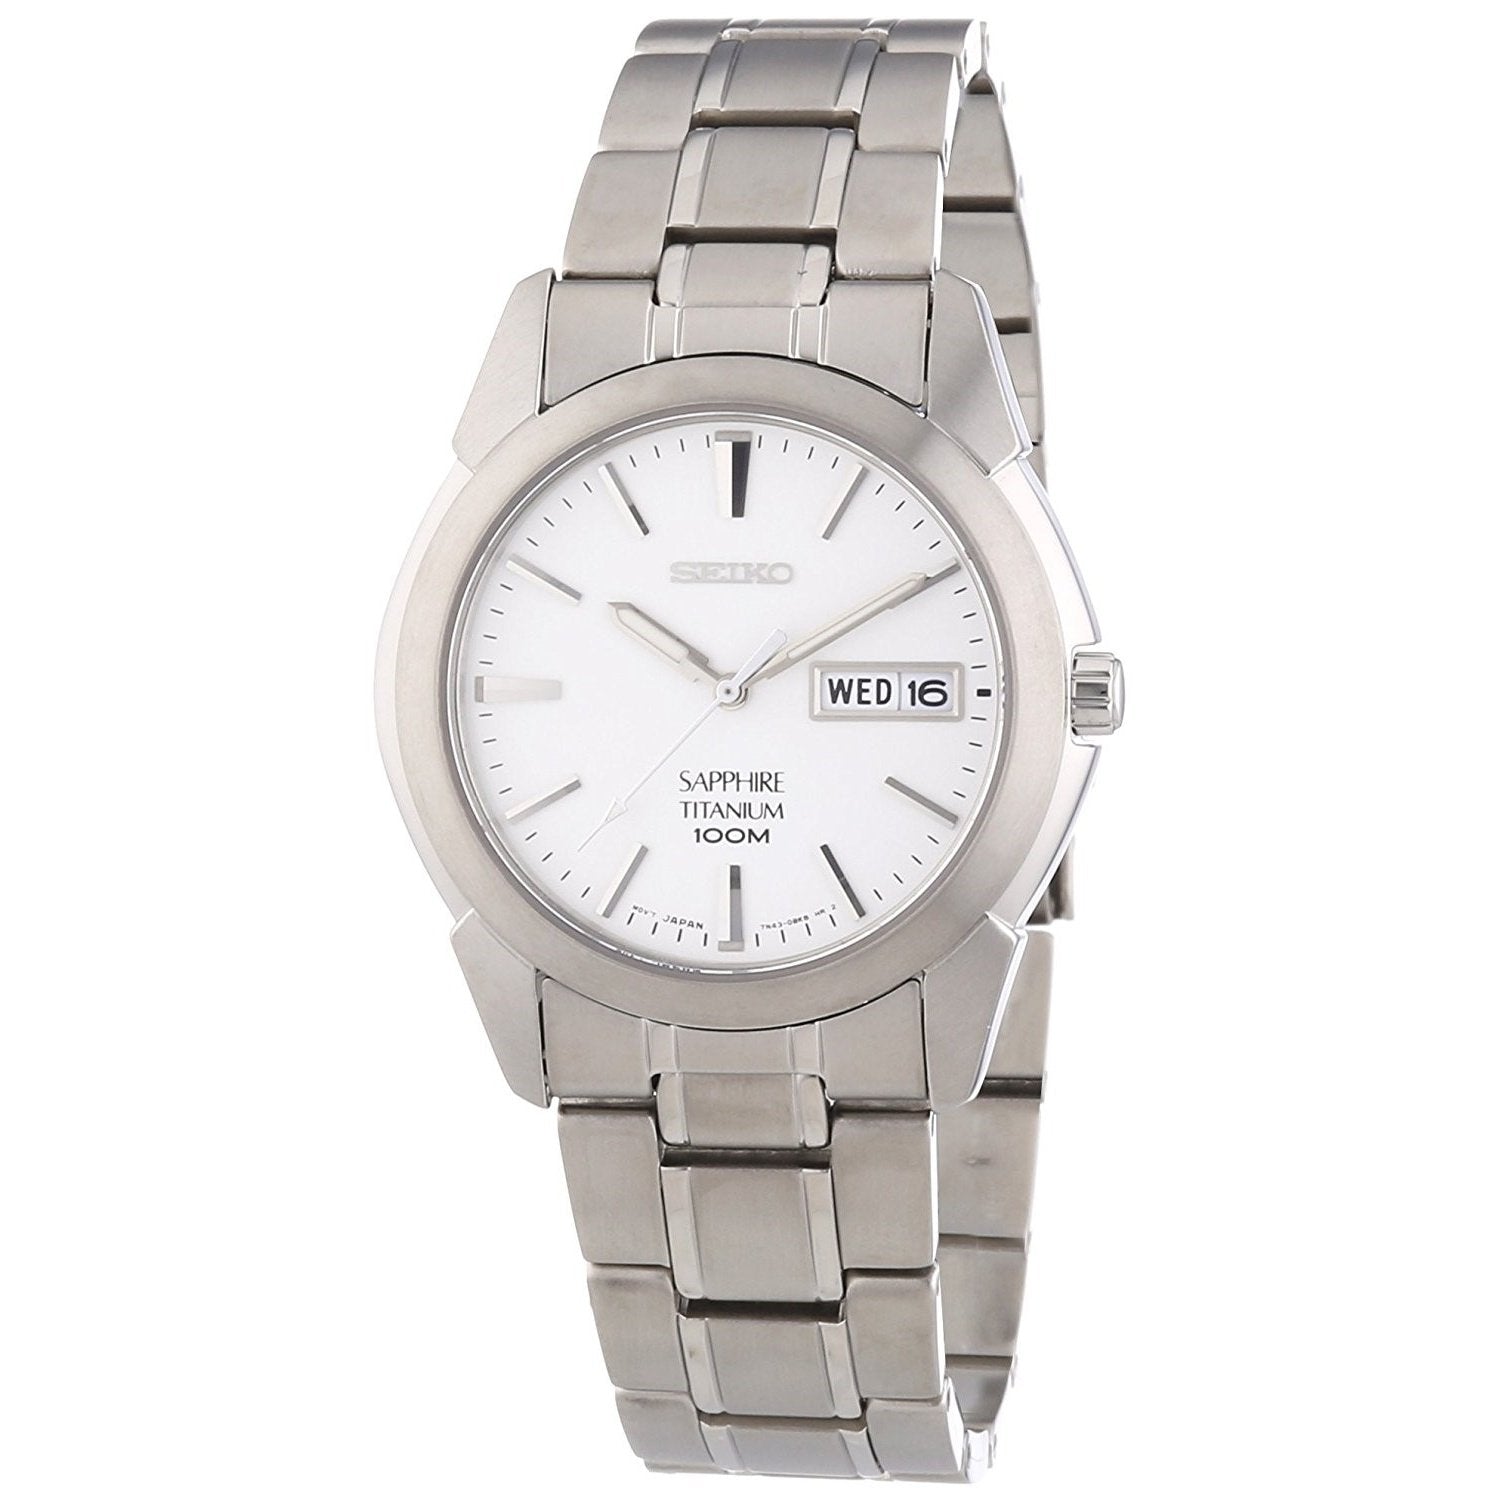 Seiko Men's SGG727 Sapphire Titanium Watch - Bezali